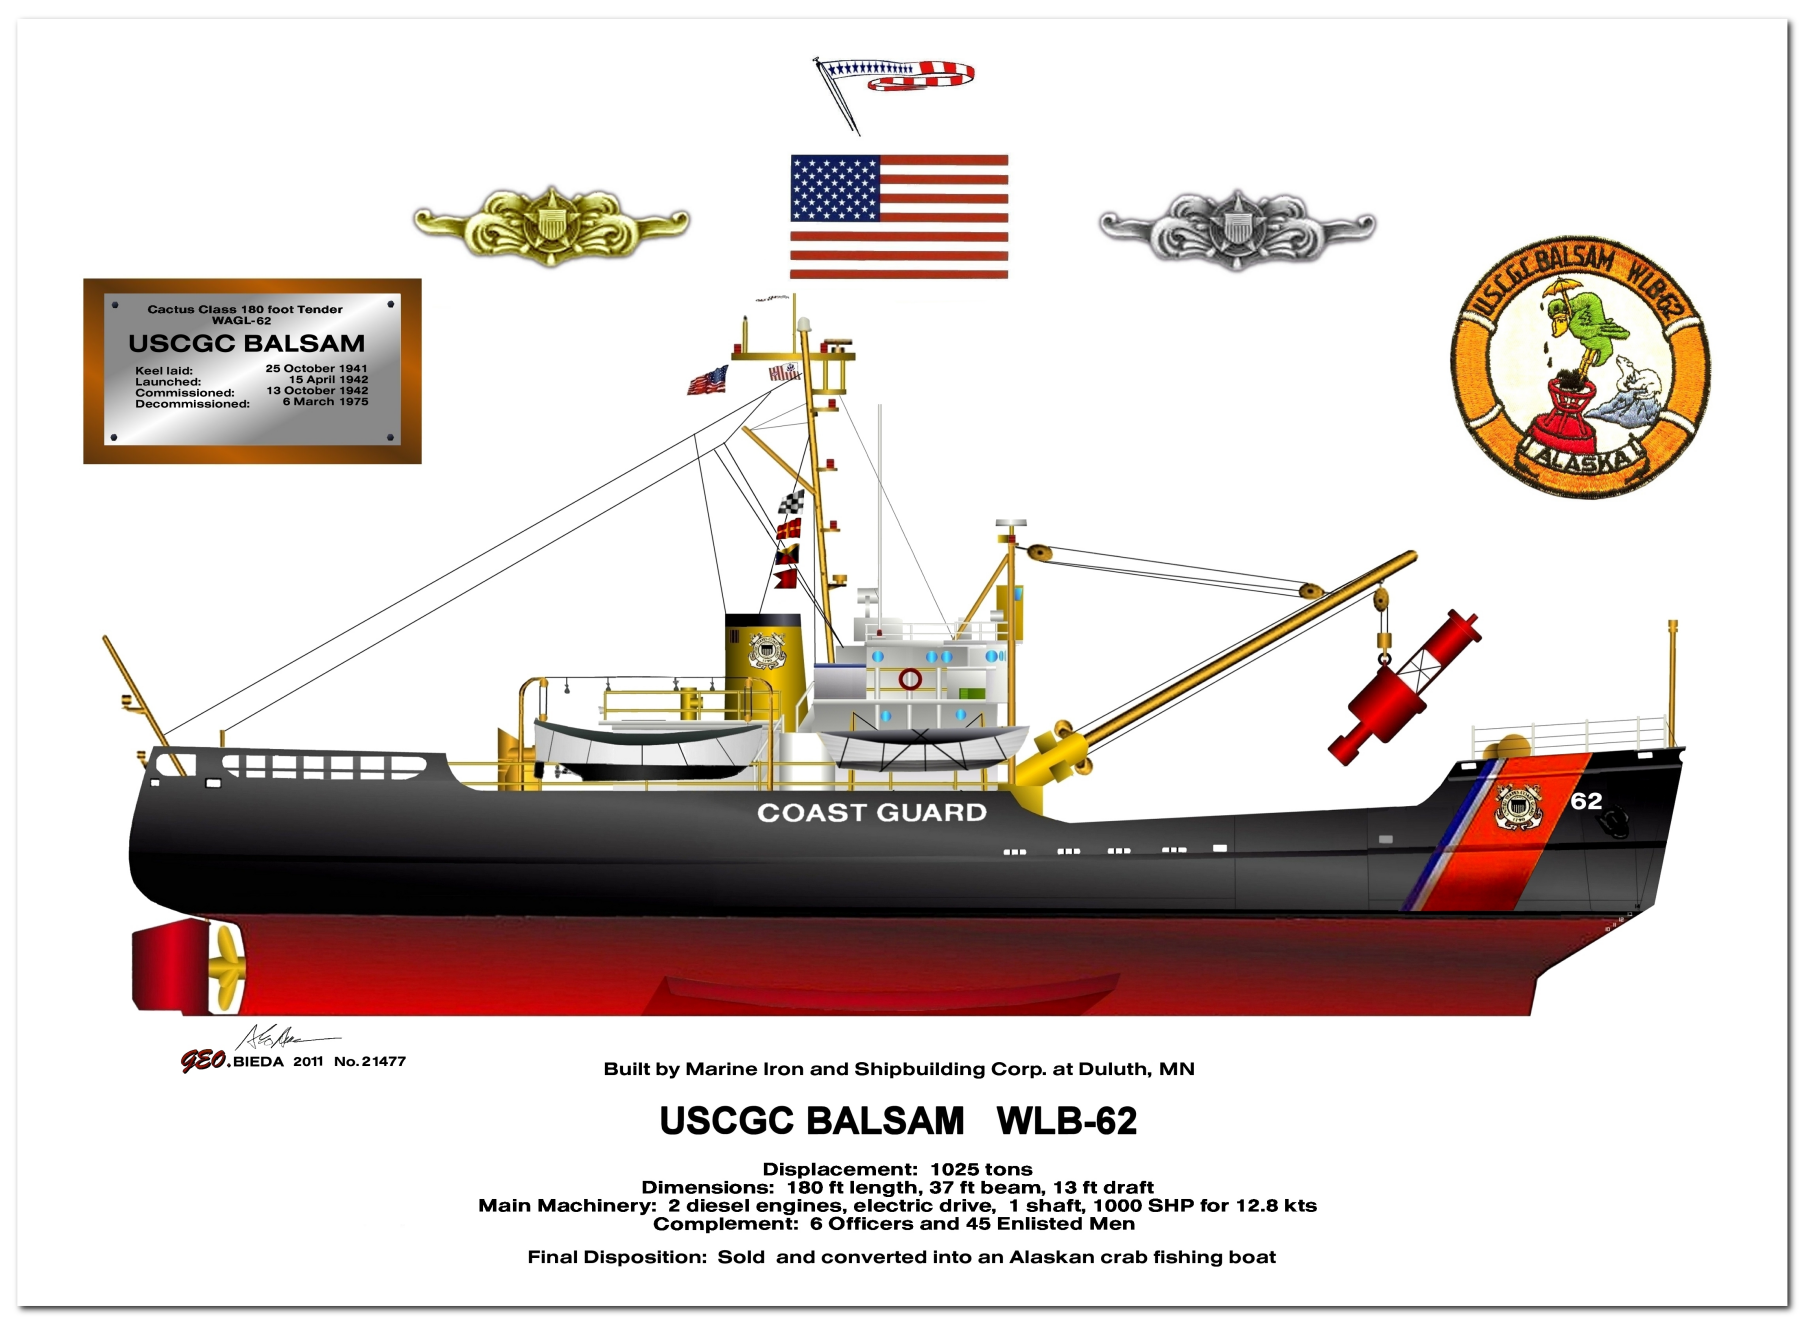 USCG Cactus Class 180 Ft. Buoy Tender Profile Drawings by George Bieda